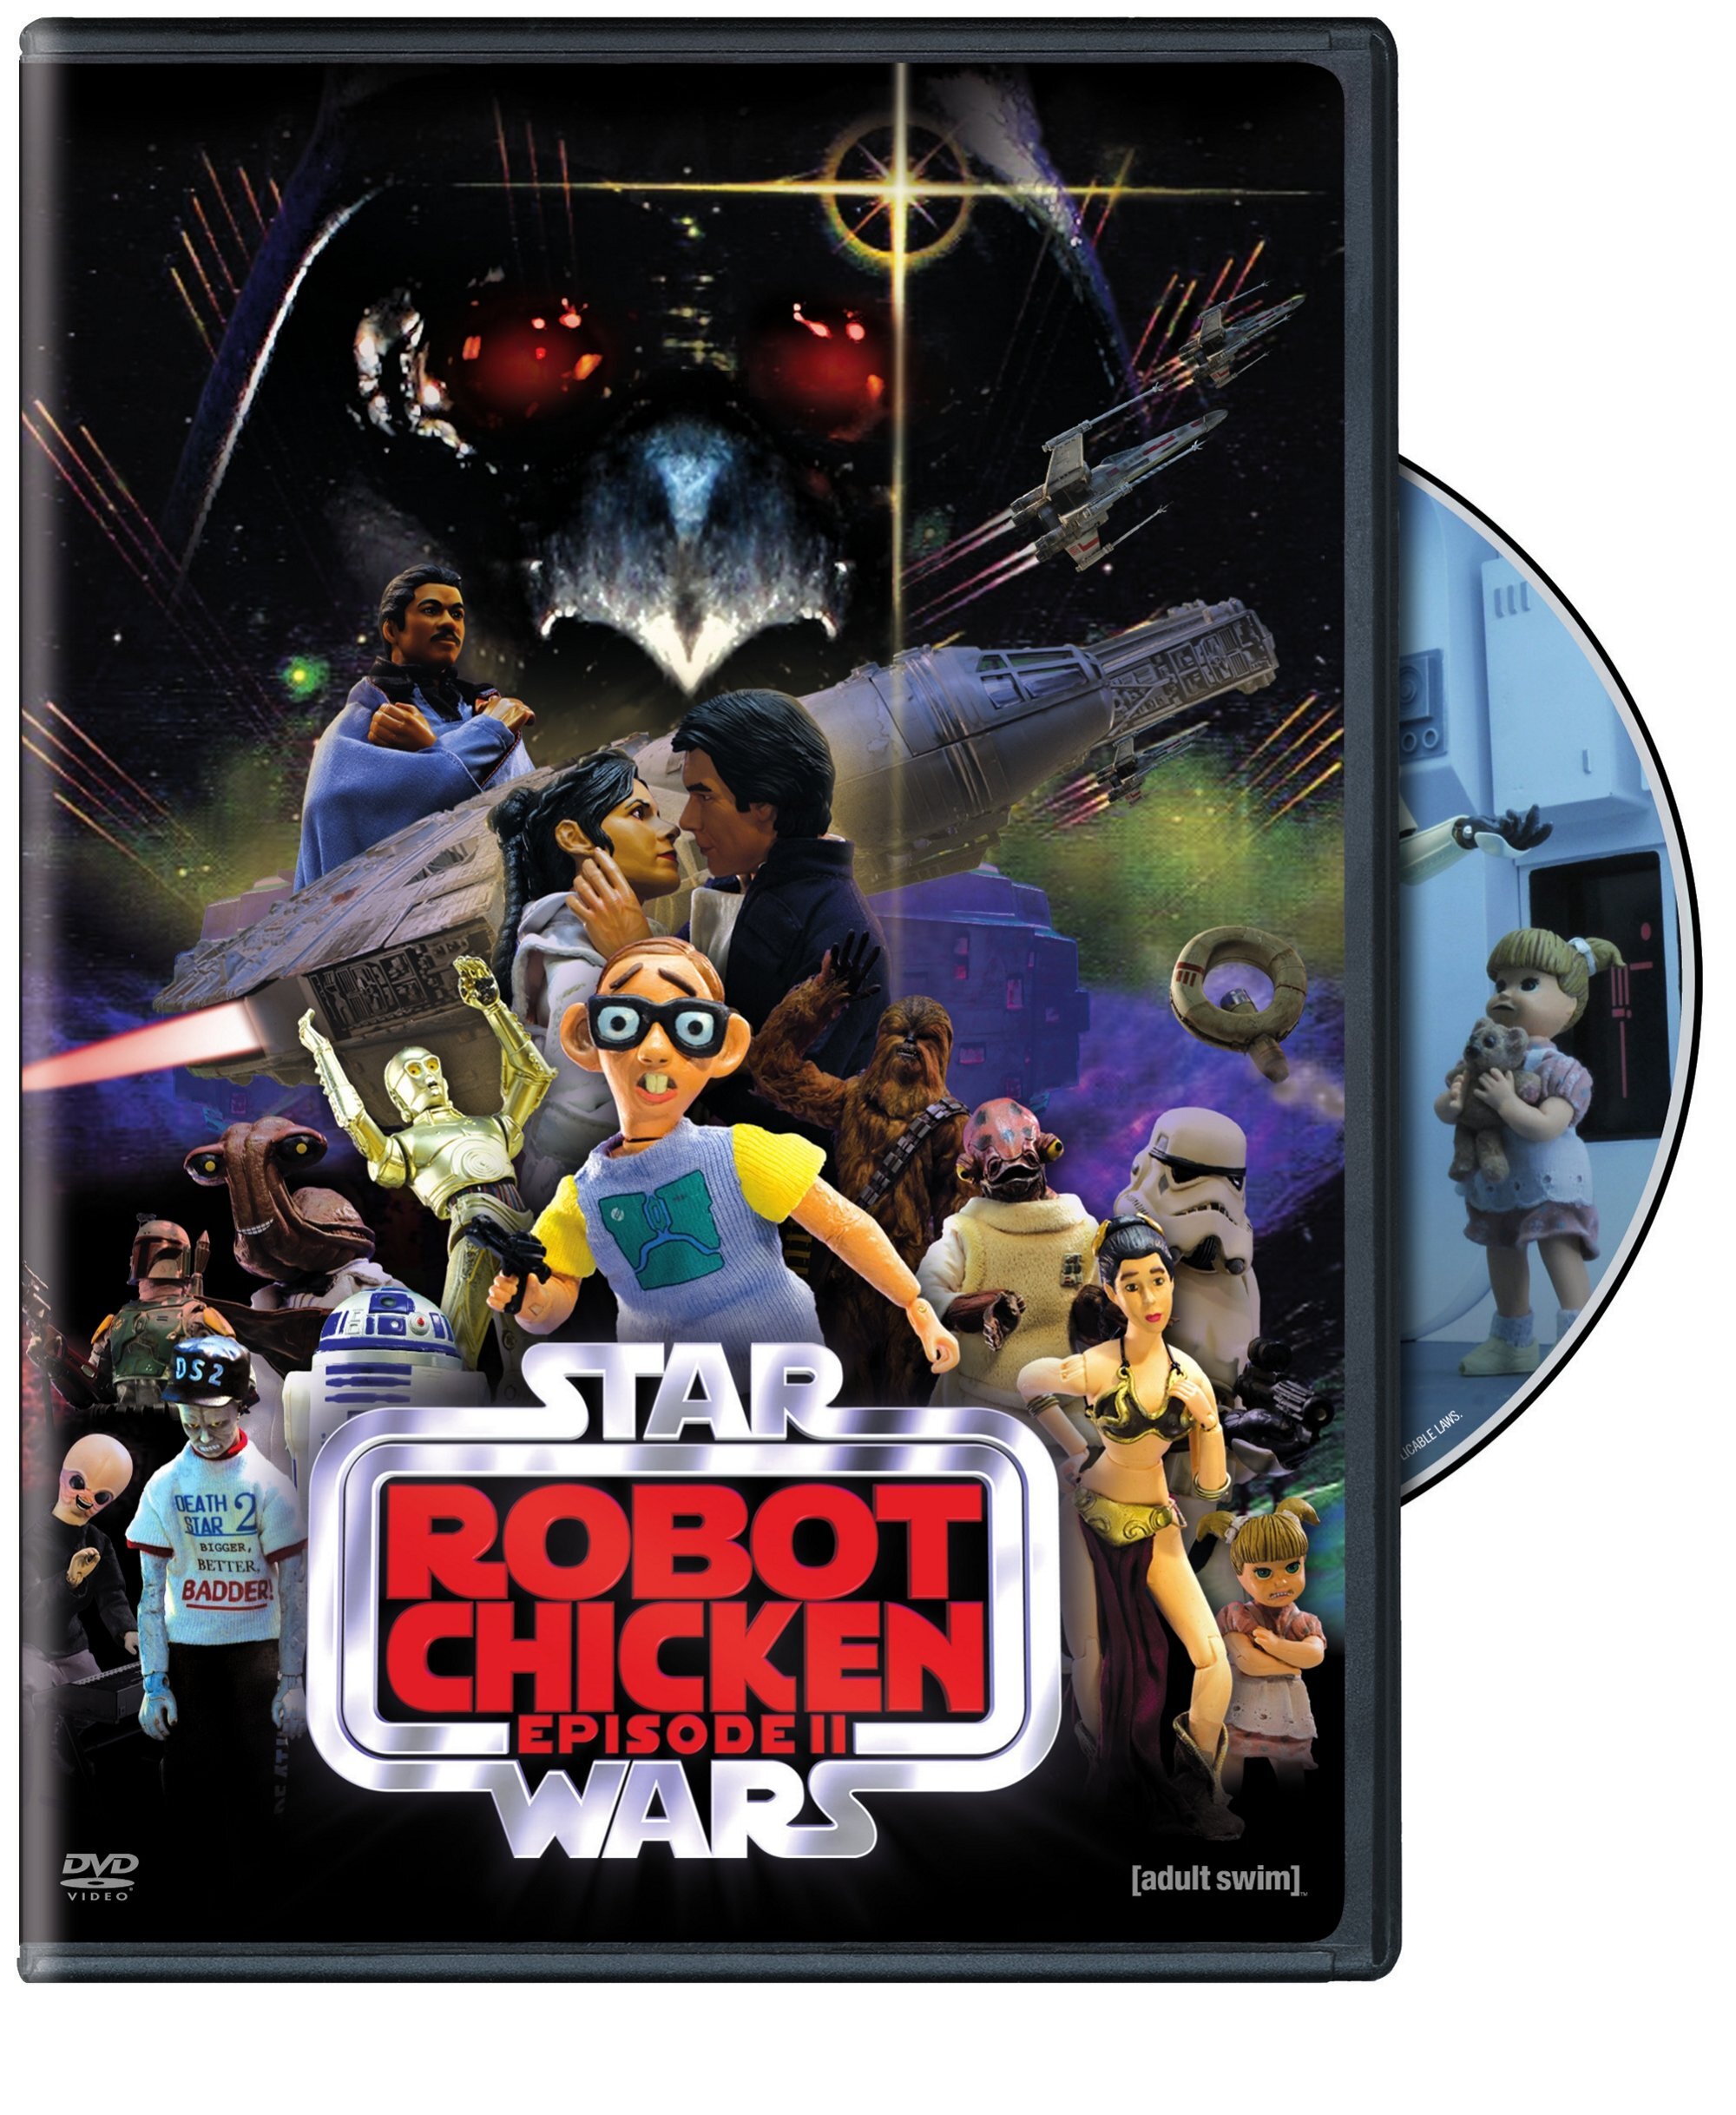 Robot Chicken: Star Wars - Episode II - DVD [ 2008 ]  - Comedy Television On DVD - TV Shows On GRUV